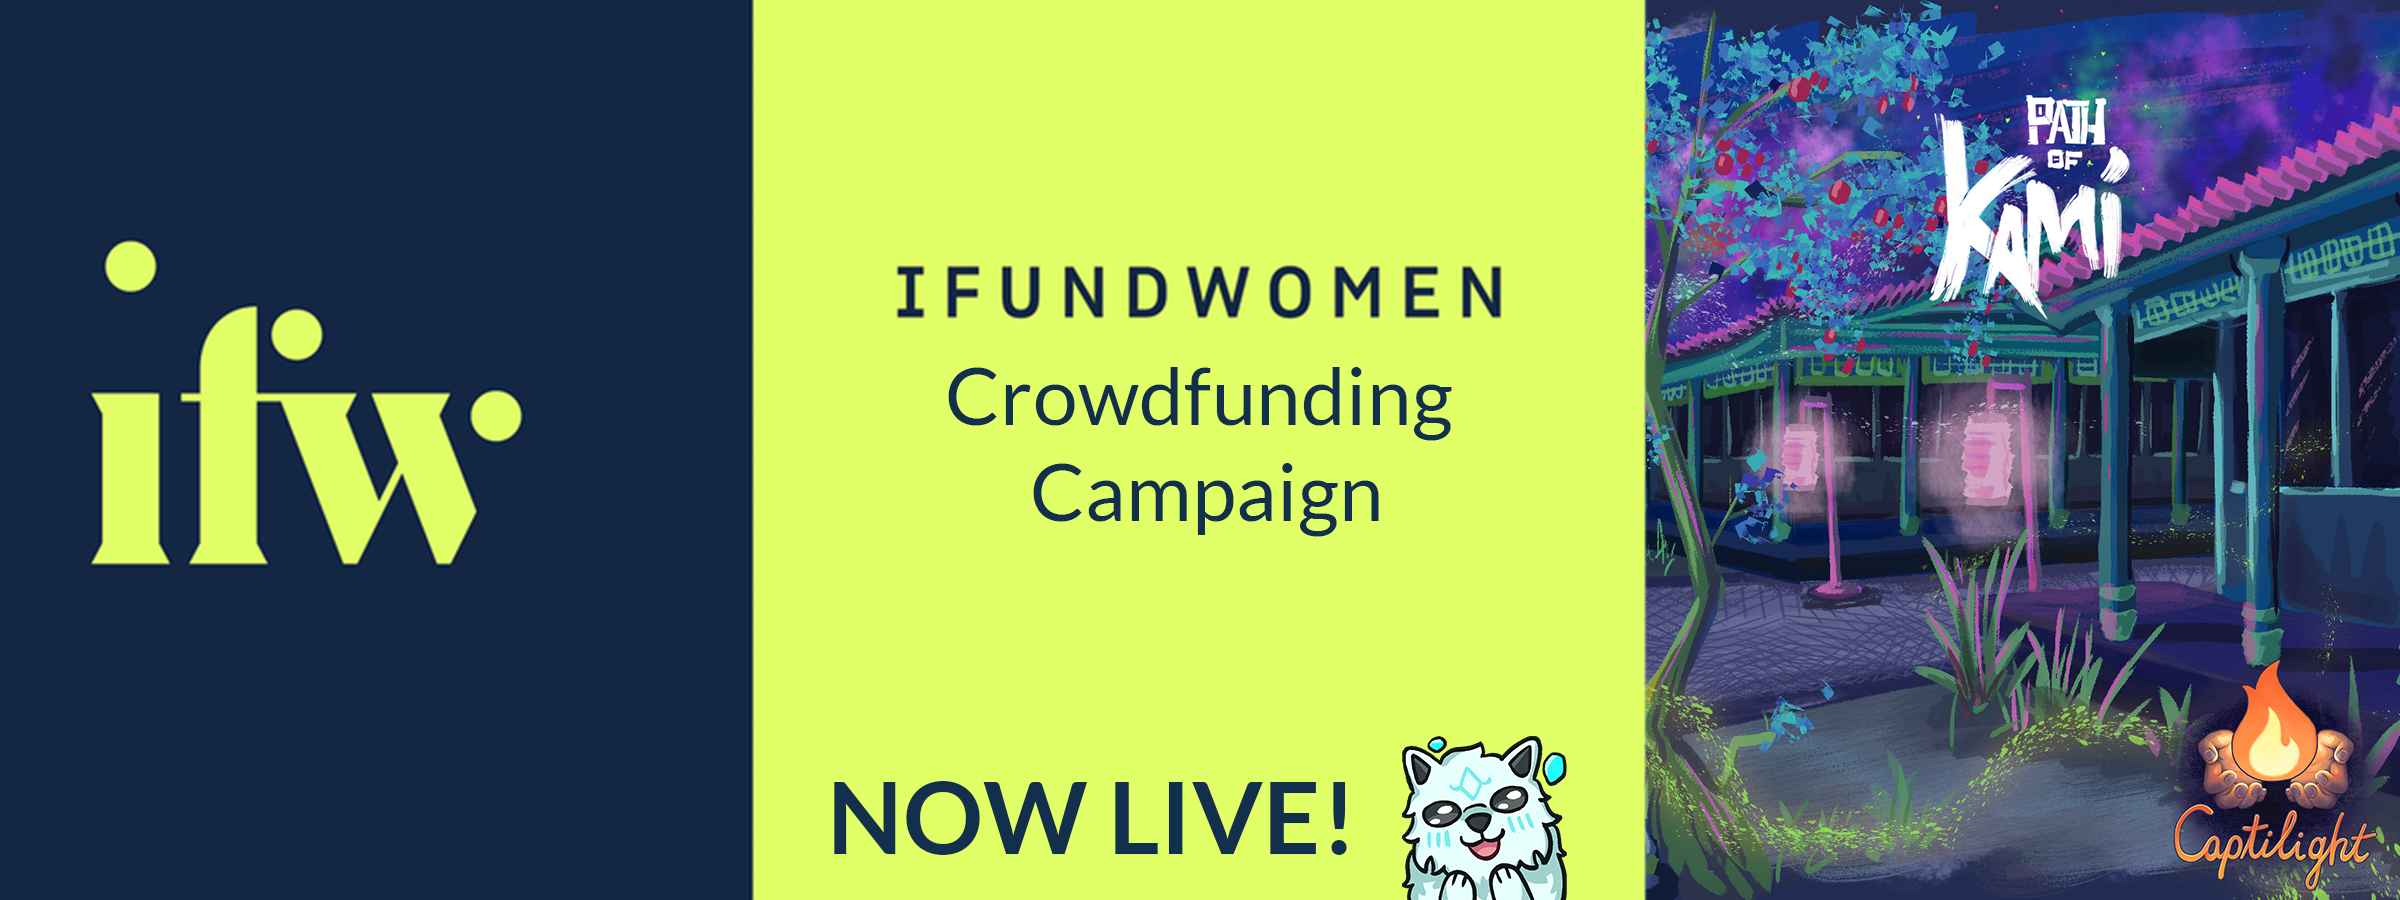 IFundWomenCrowdfunding Campaign